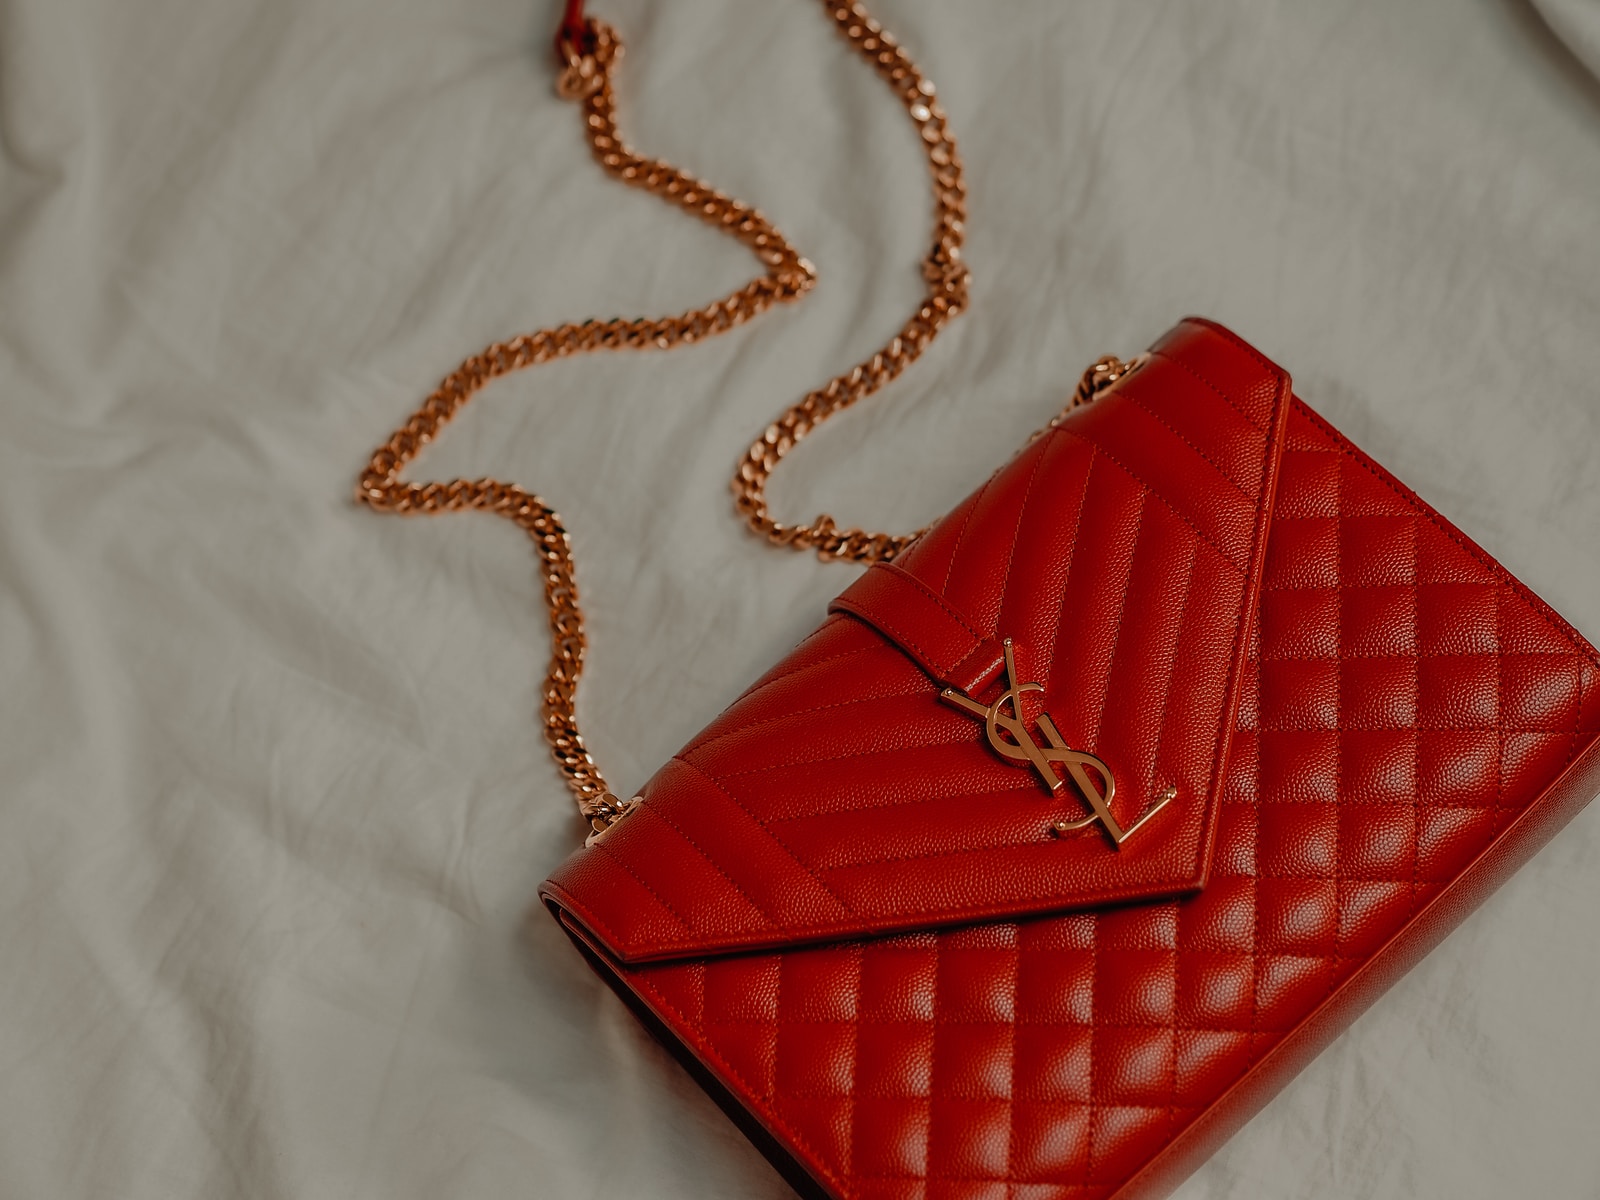 Selling Designer Handbags - Advice On Selling Wholesale Dooney & Burke Bags | LeoClassifieds.com